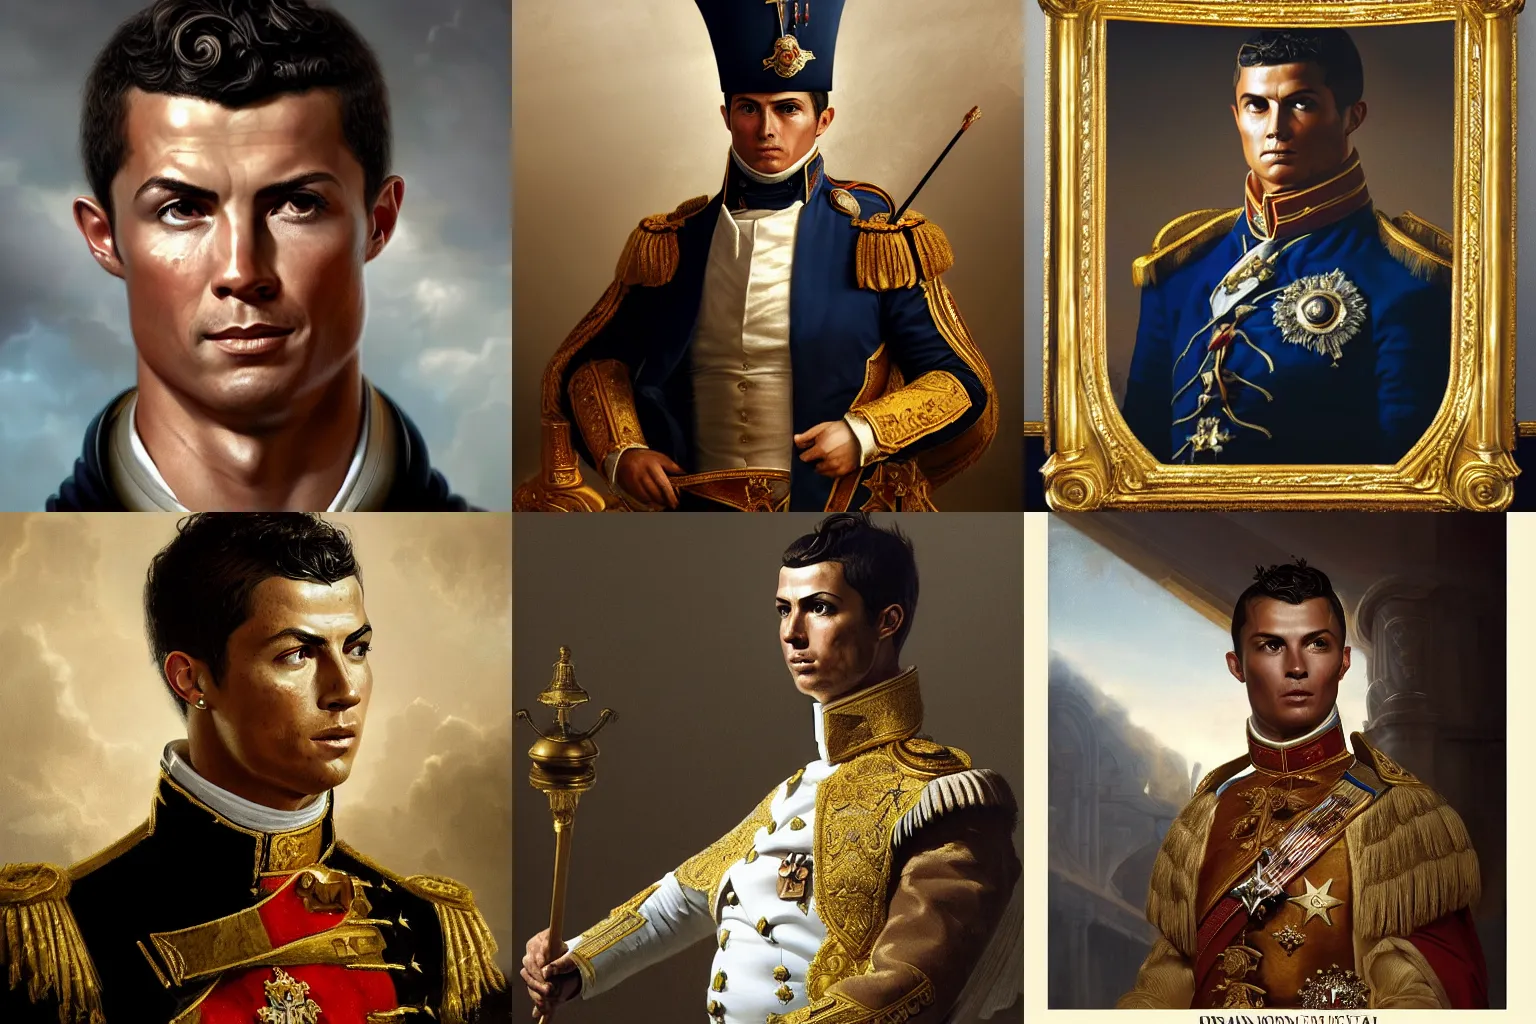 Prompt: Portrait of Cristiano Ronaldo as Emperor Napoleon, stunning screensaver, screensaver, head slightly tilted, natural light, elegant, intricate, fantasy, atmospheric lighting, cinematic, matte painting, Greg Rutkowski